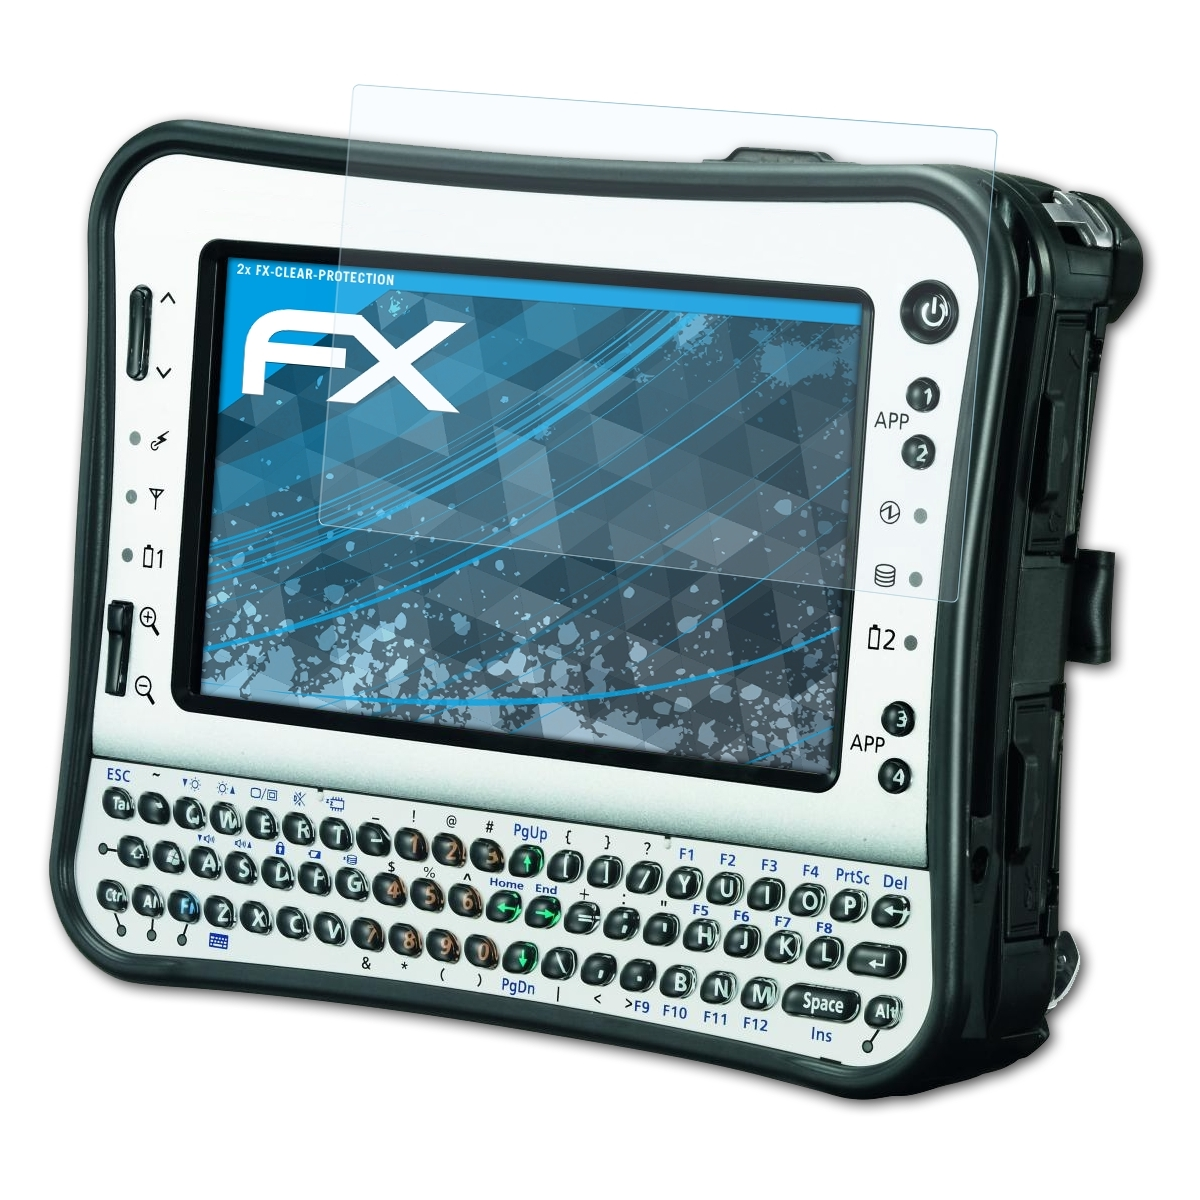 ATFOLIX 2x Panasonic Displayschutz(für FX-Clear ToughBook CF-U1)